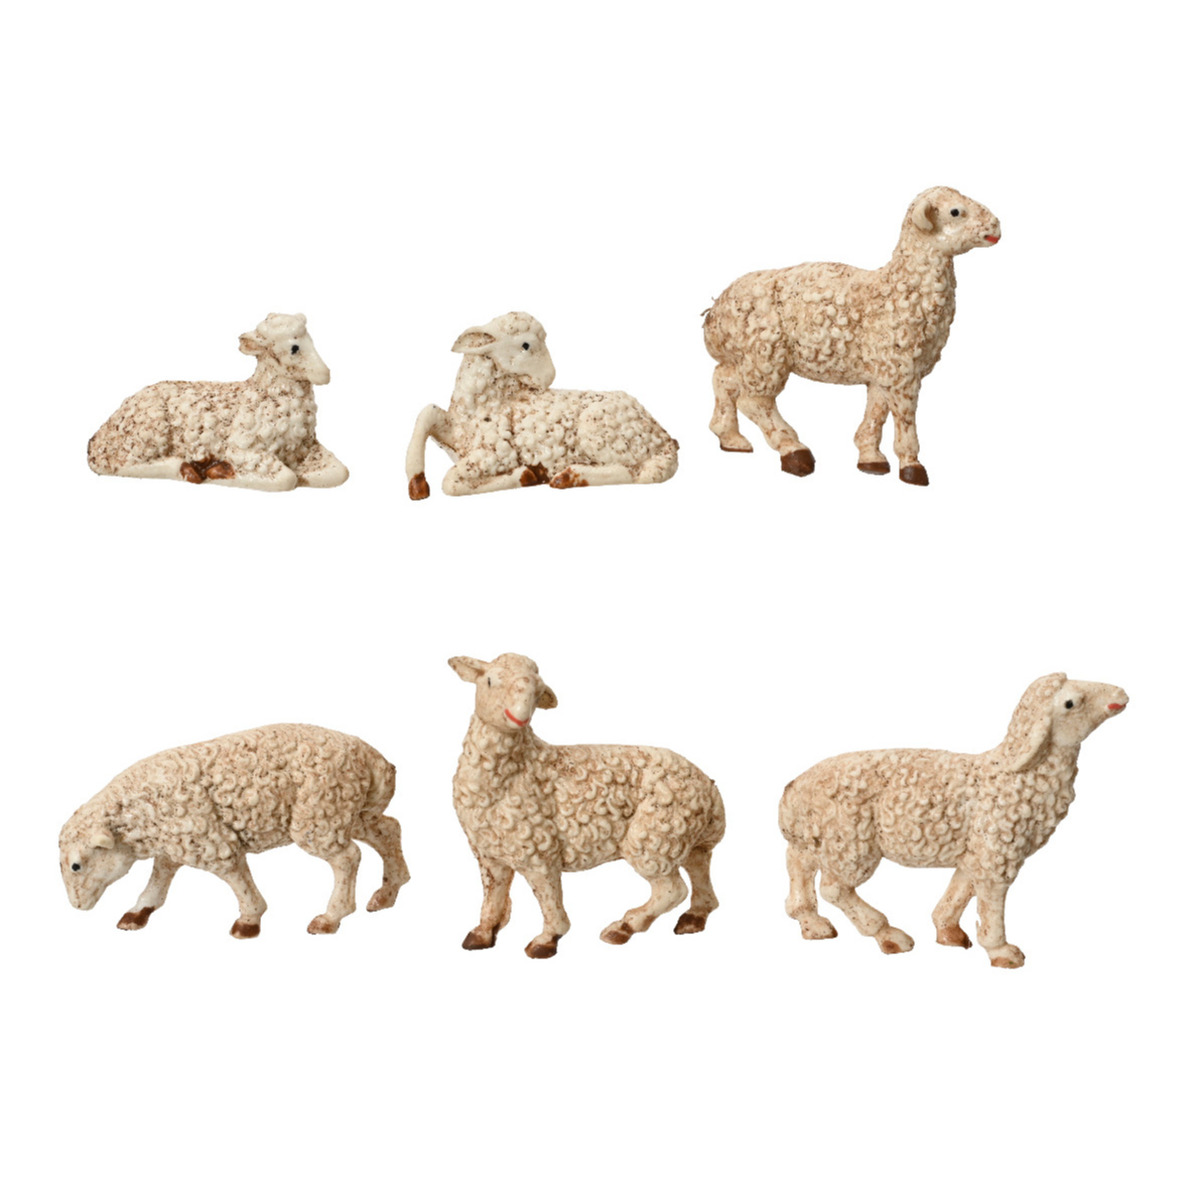 Decoris schapenbeeldjes 6x stuks 12 cm mdf hout